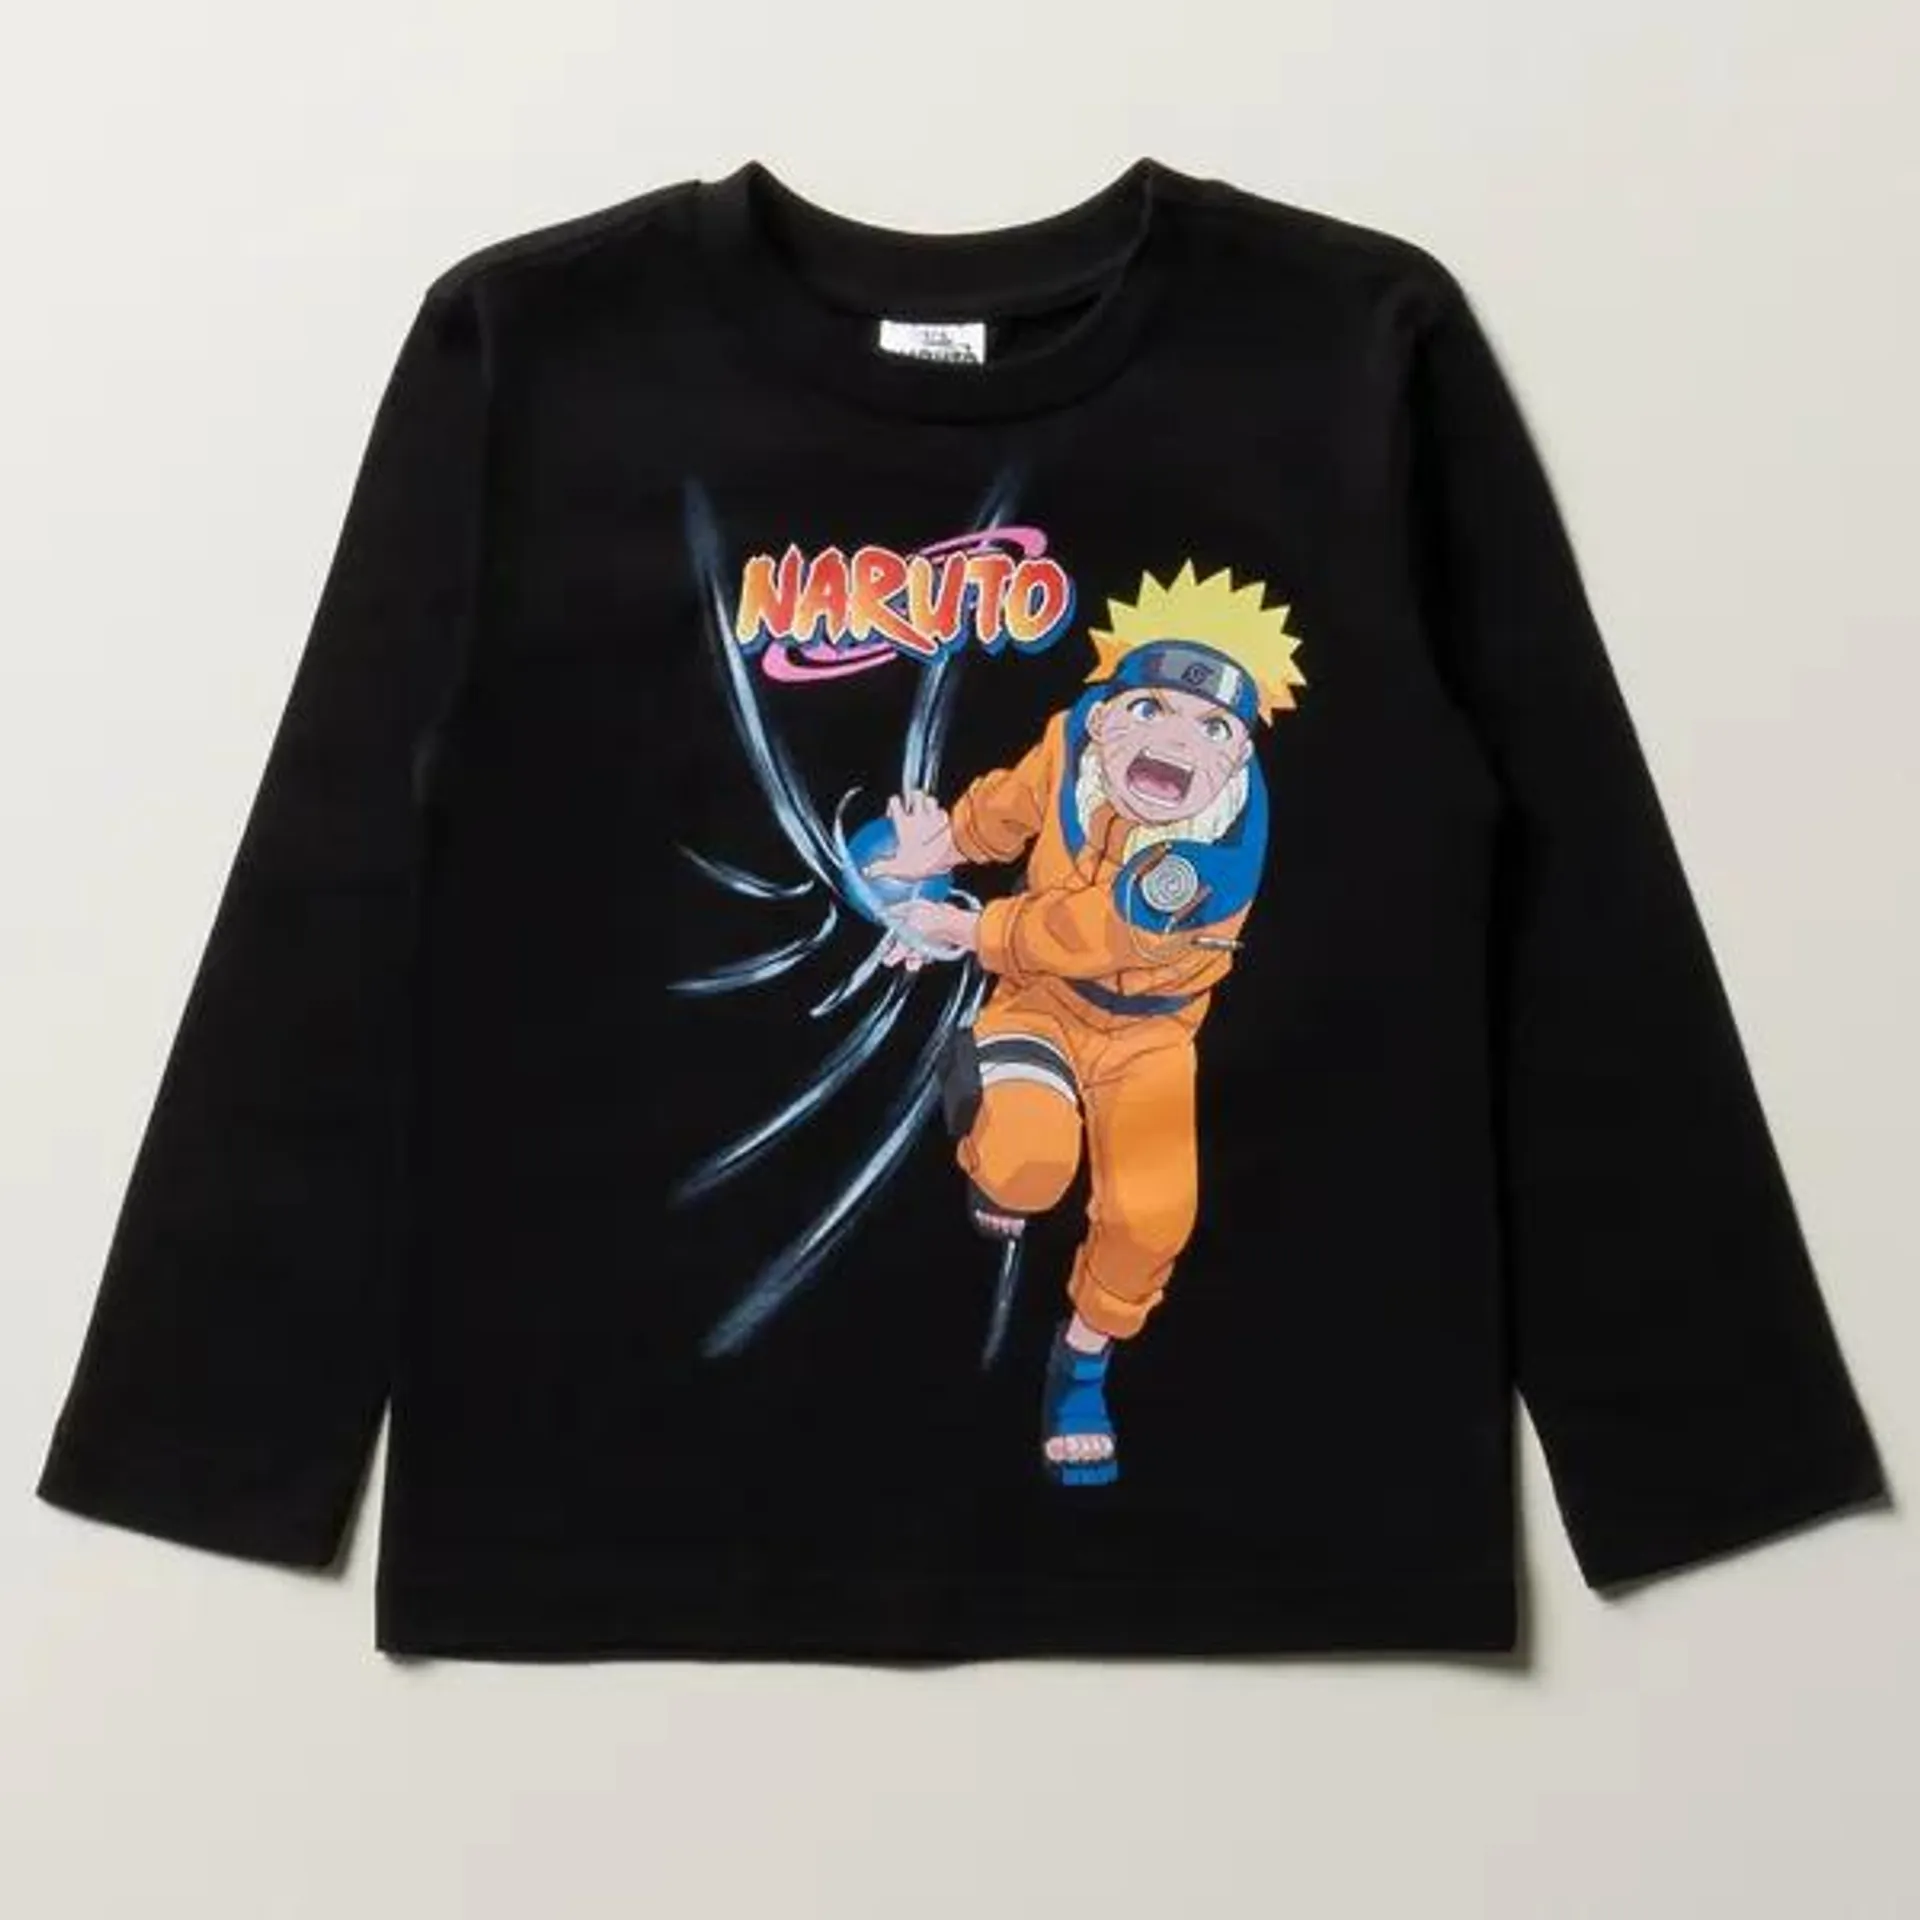 Naruto long sleeve t-shirt black